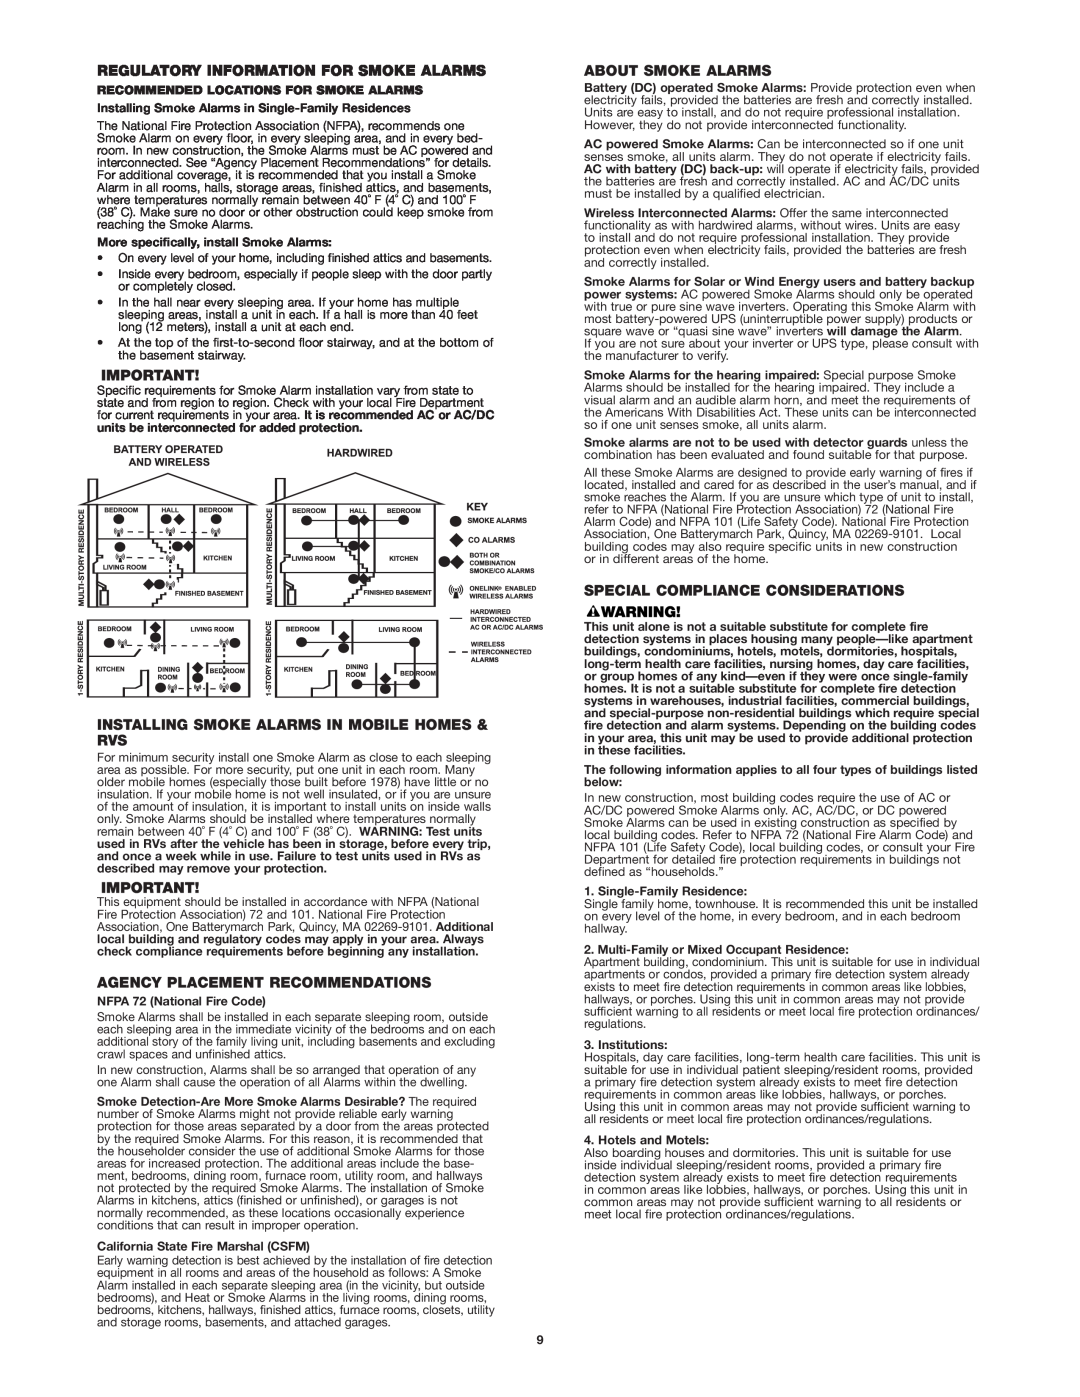 First Alert SC9120B user manual Regulatory Information For Smoke Alarms, Installing Smoke Alarms In Mobile Homes & Rvs 